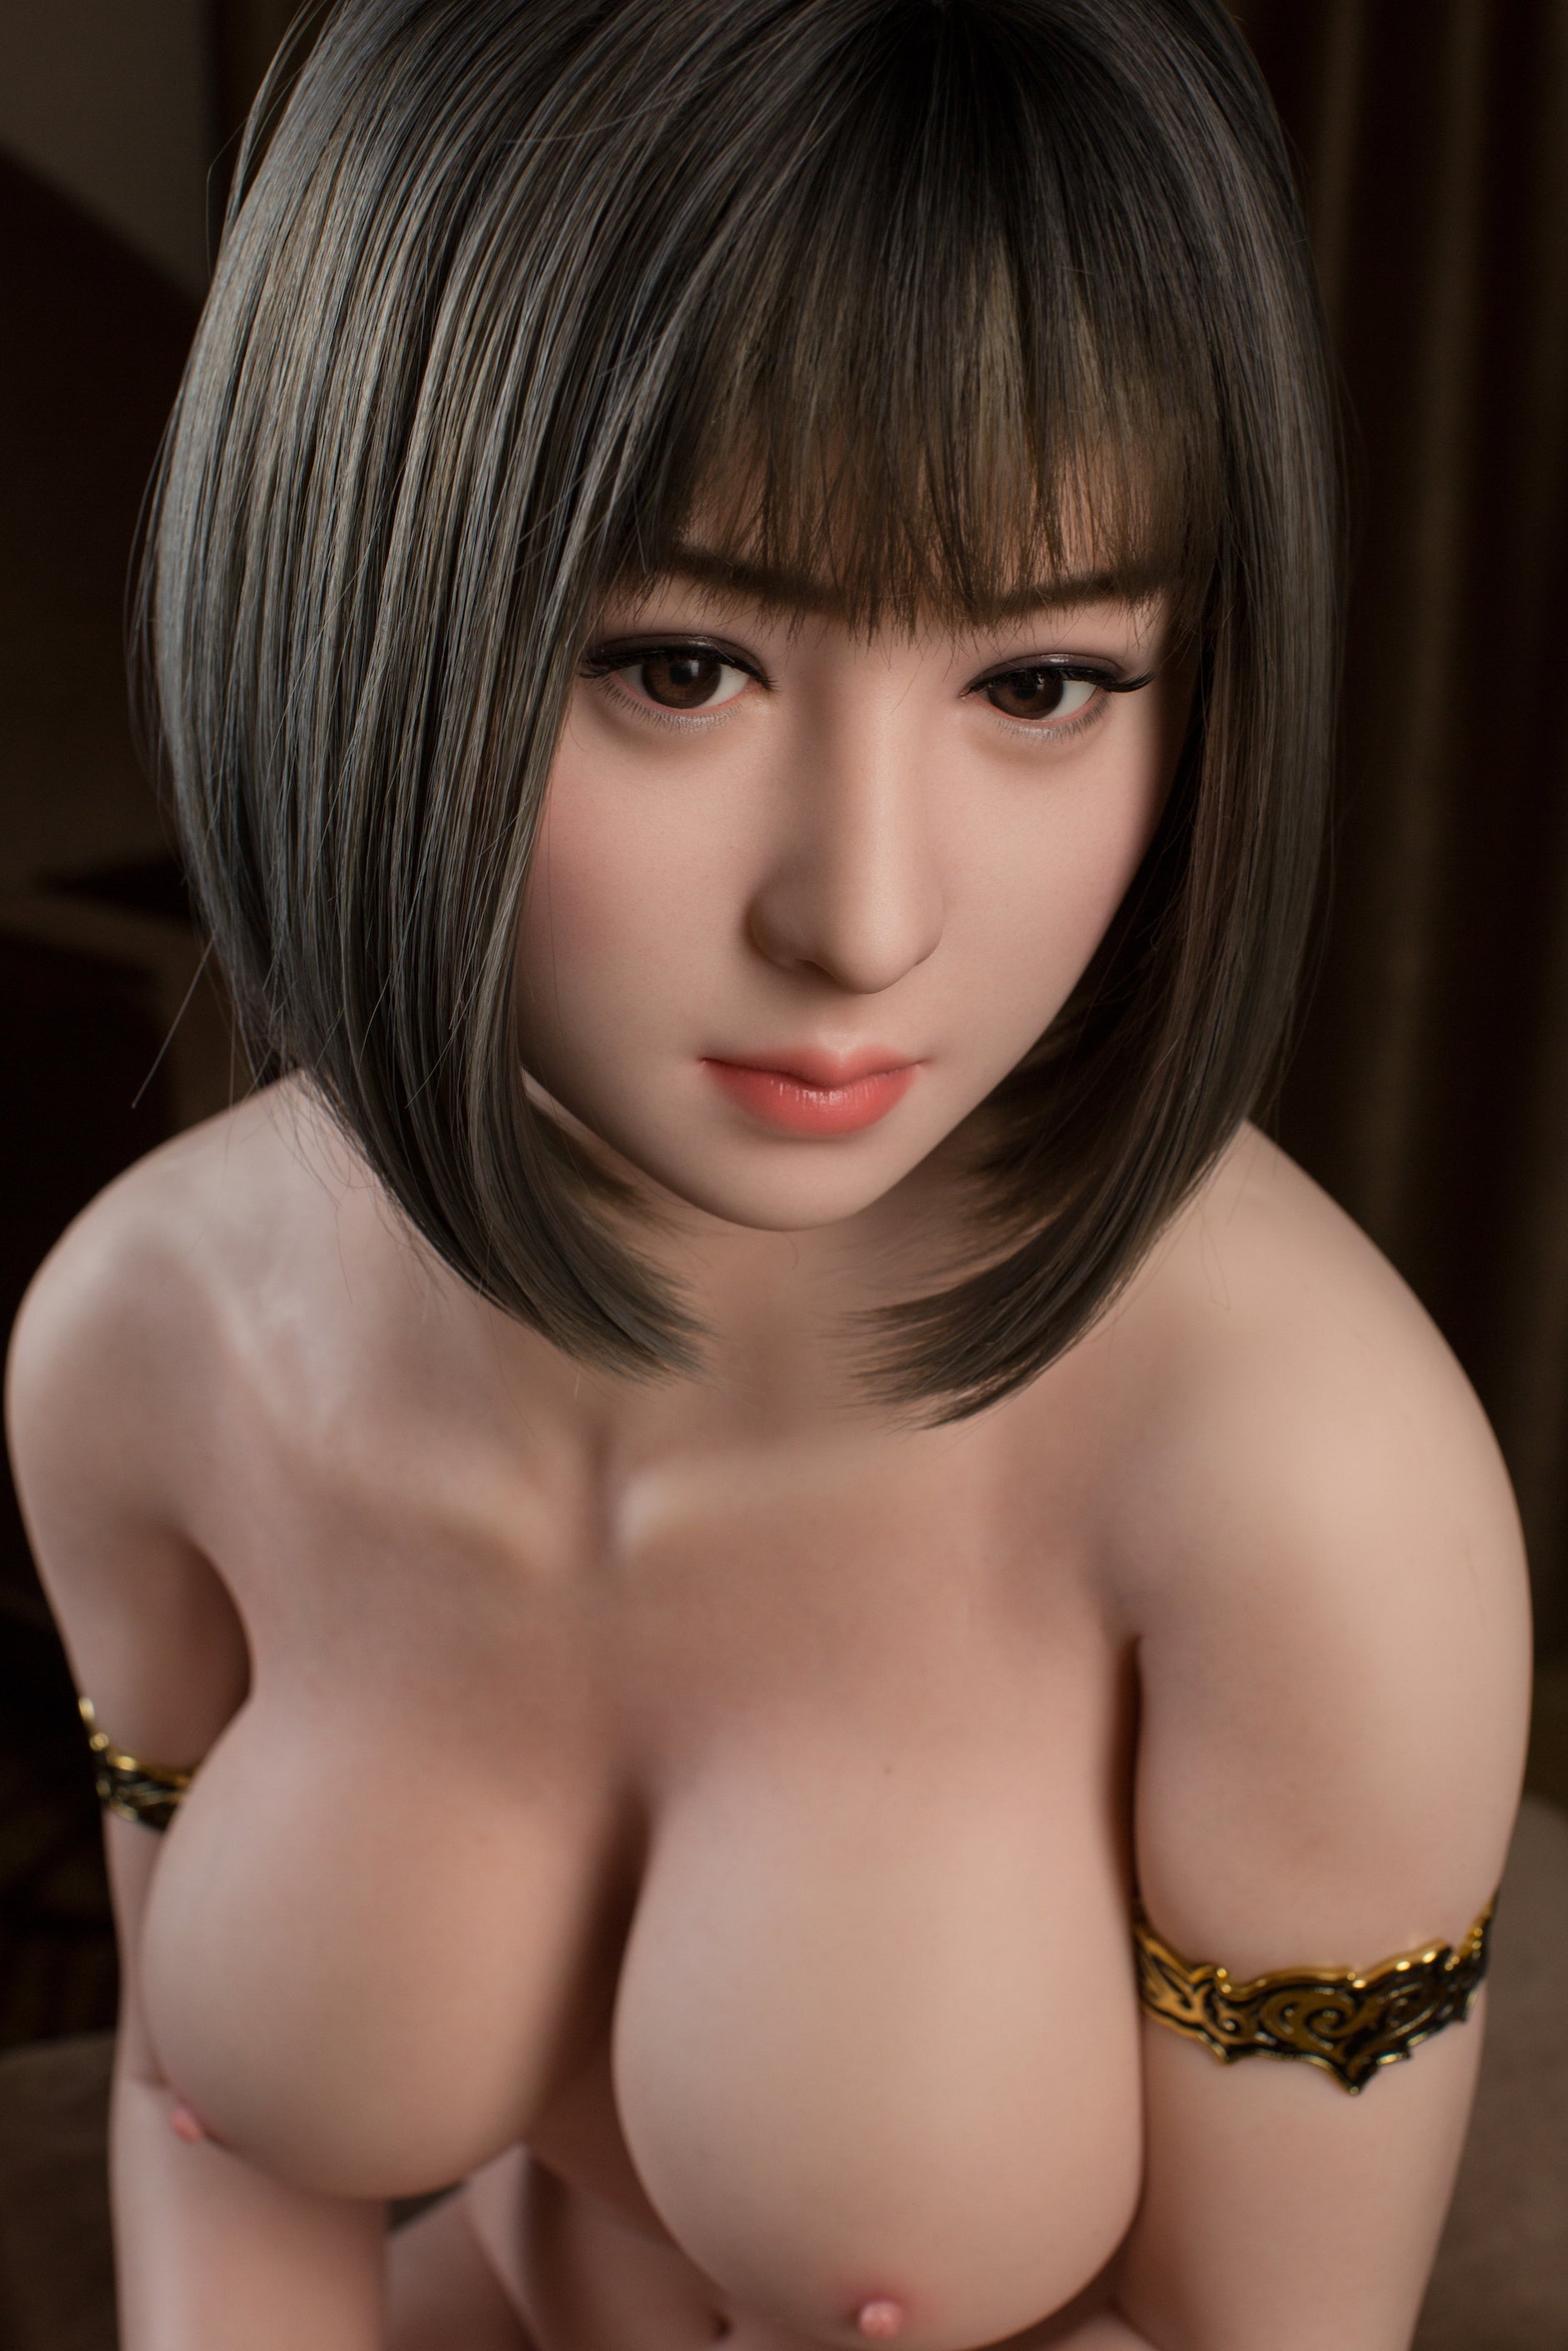 Gynoid Model 6 - Misatto Shinohara - Love Dolls 4U